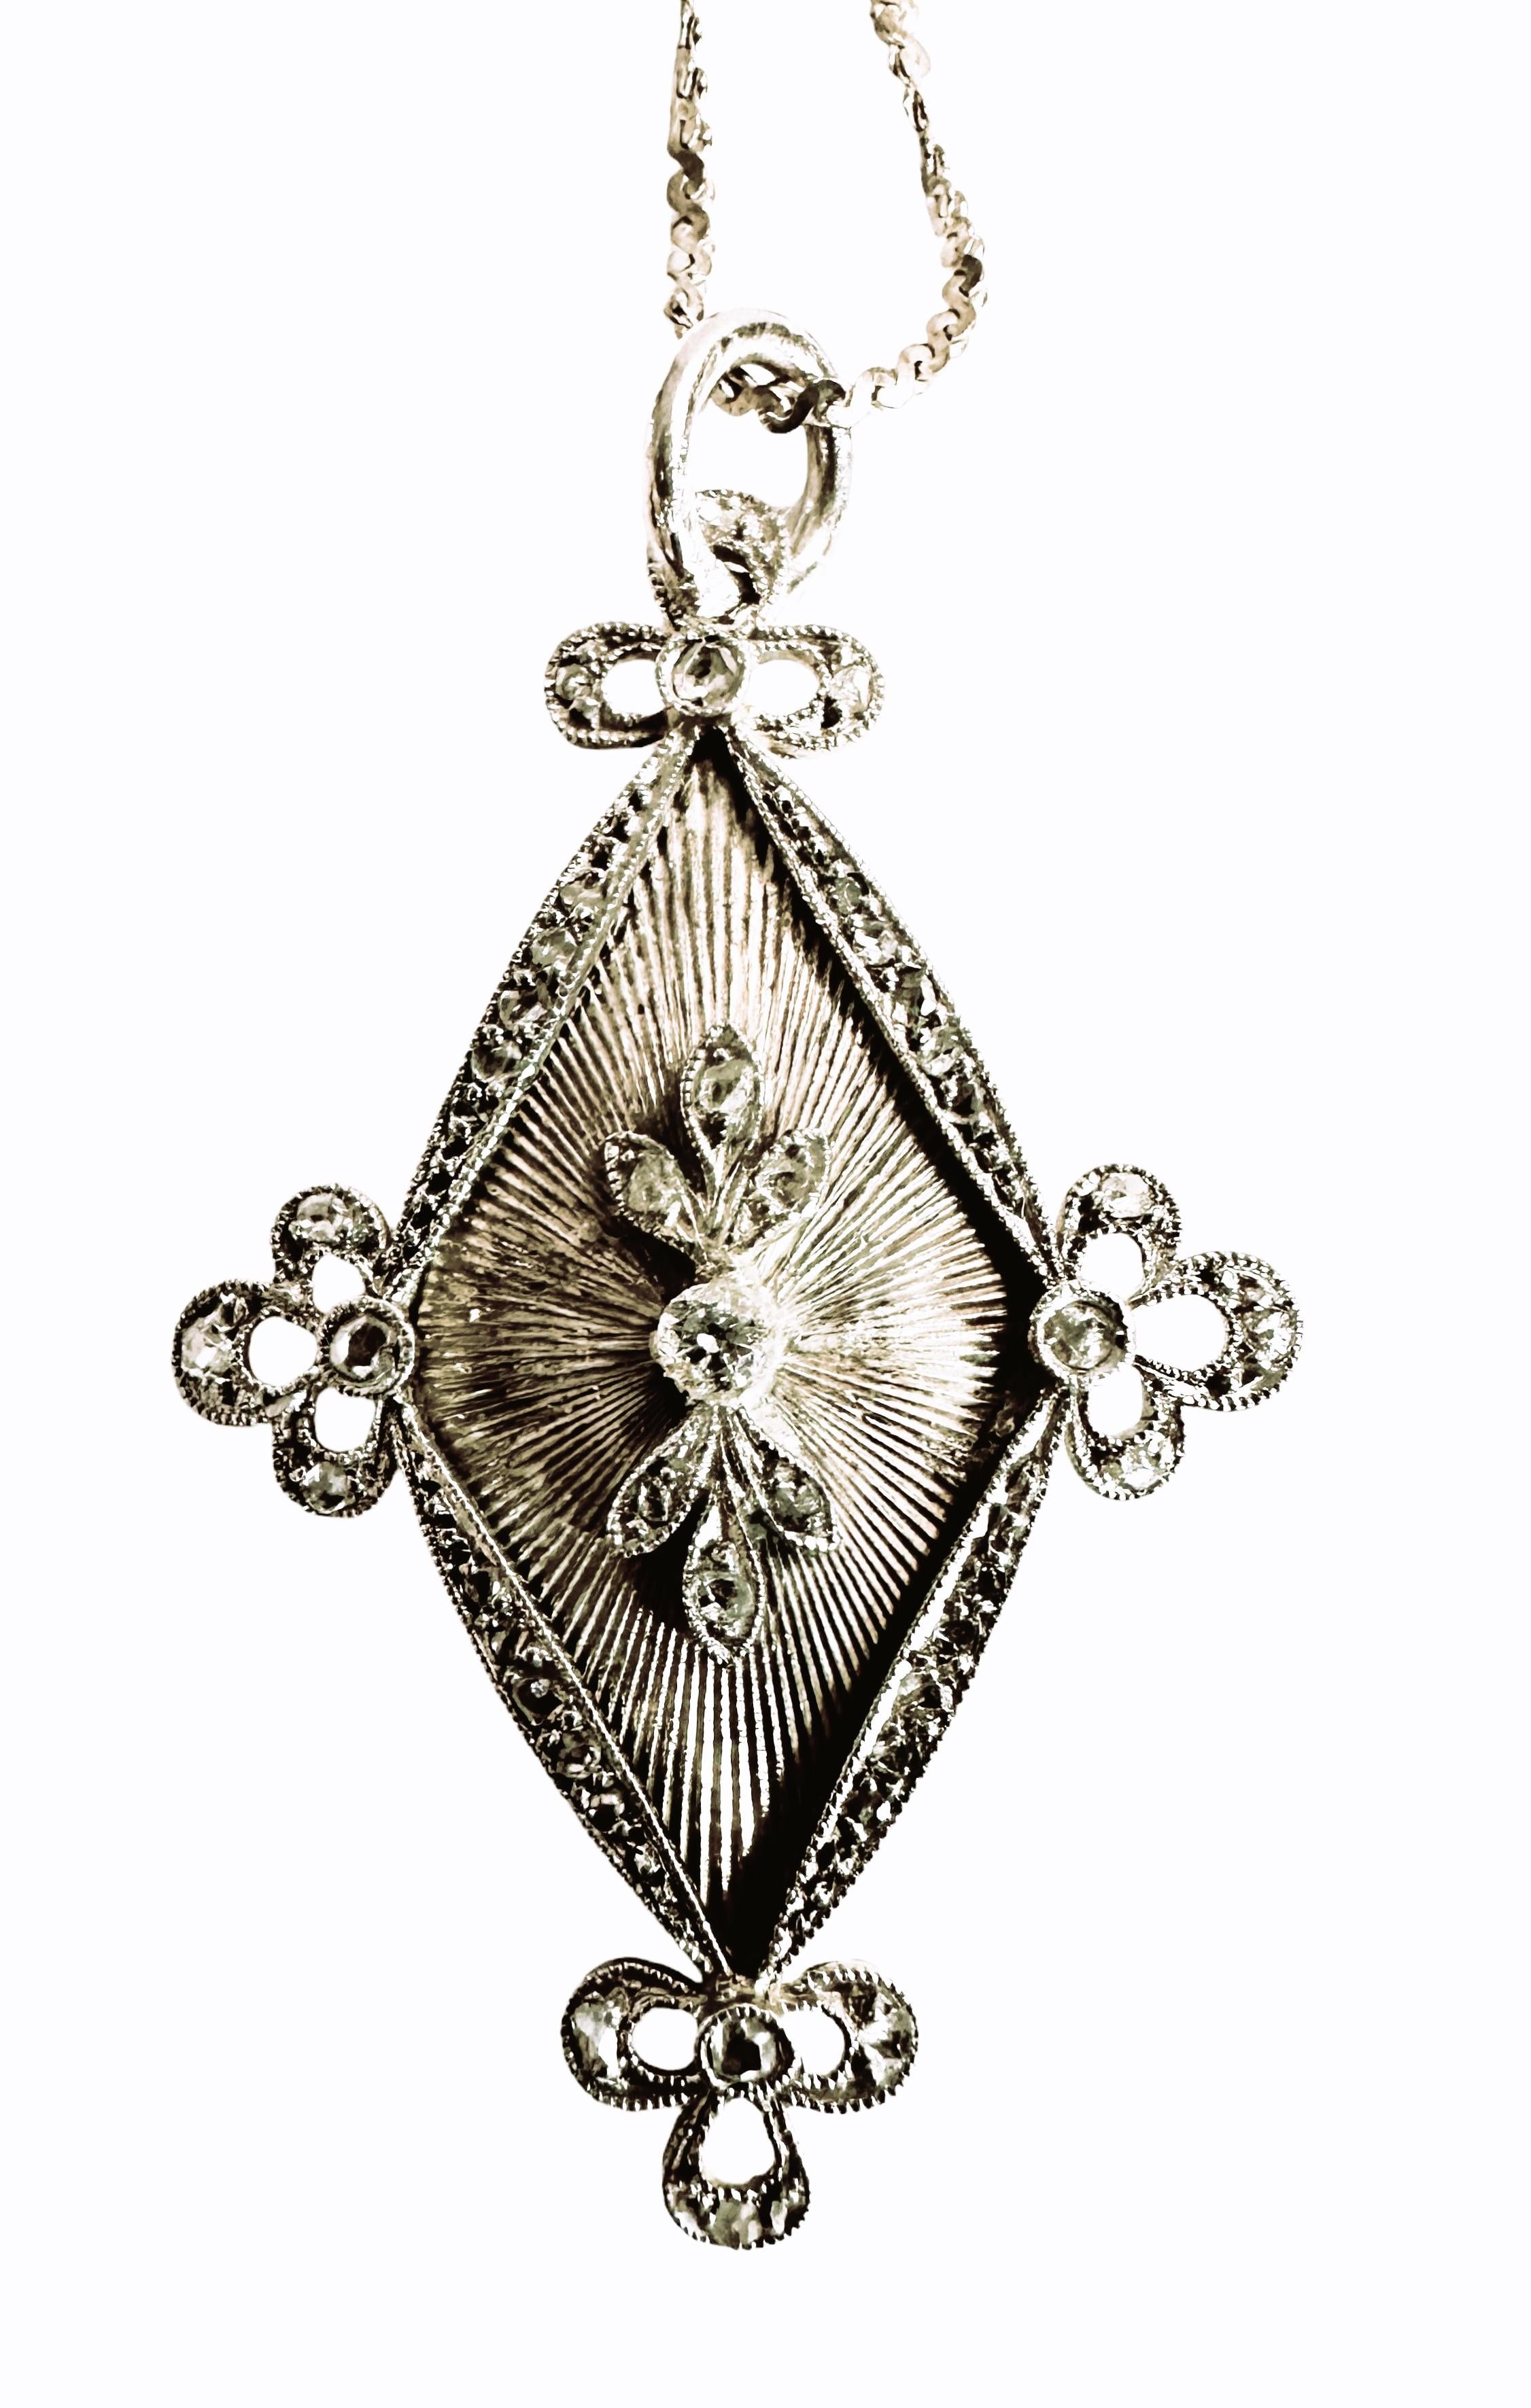 Antique 14k WG Rose Cut & Mine Cut Diamond Pendant w 14k White Gold 18